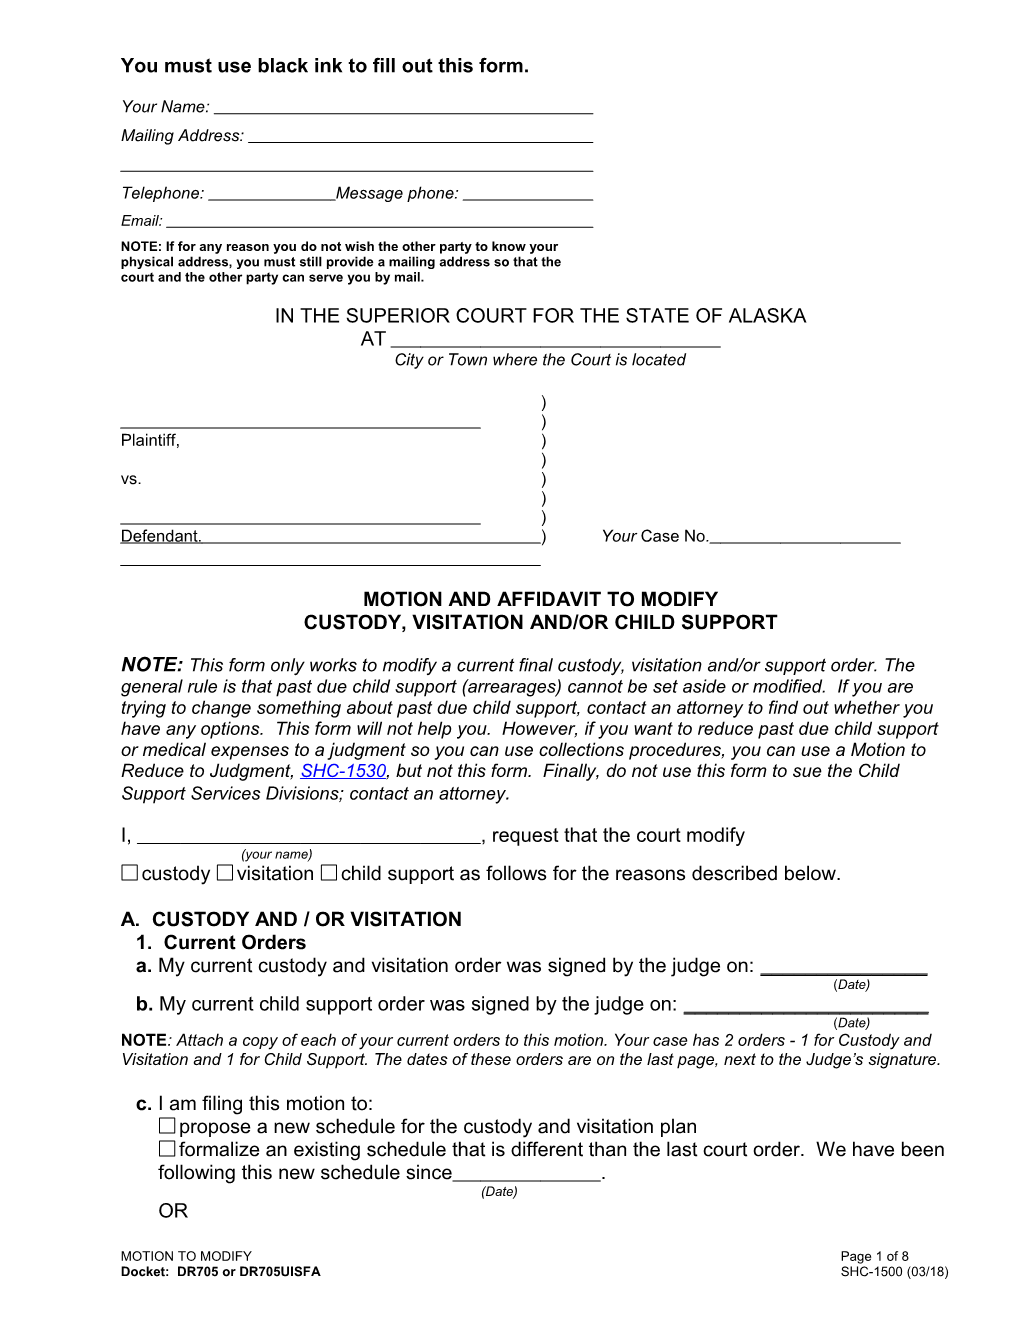 Motion and Affidavit to Modify Custody, Visitation And/Or Child Support, Shc-1500